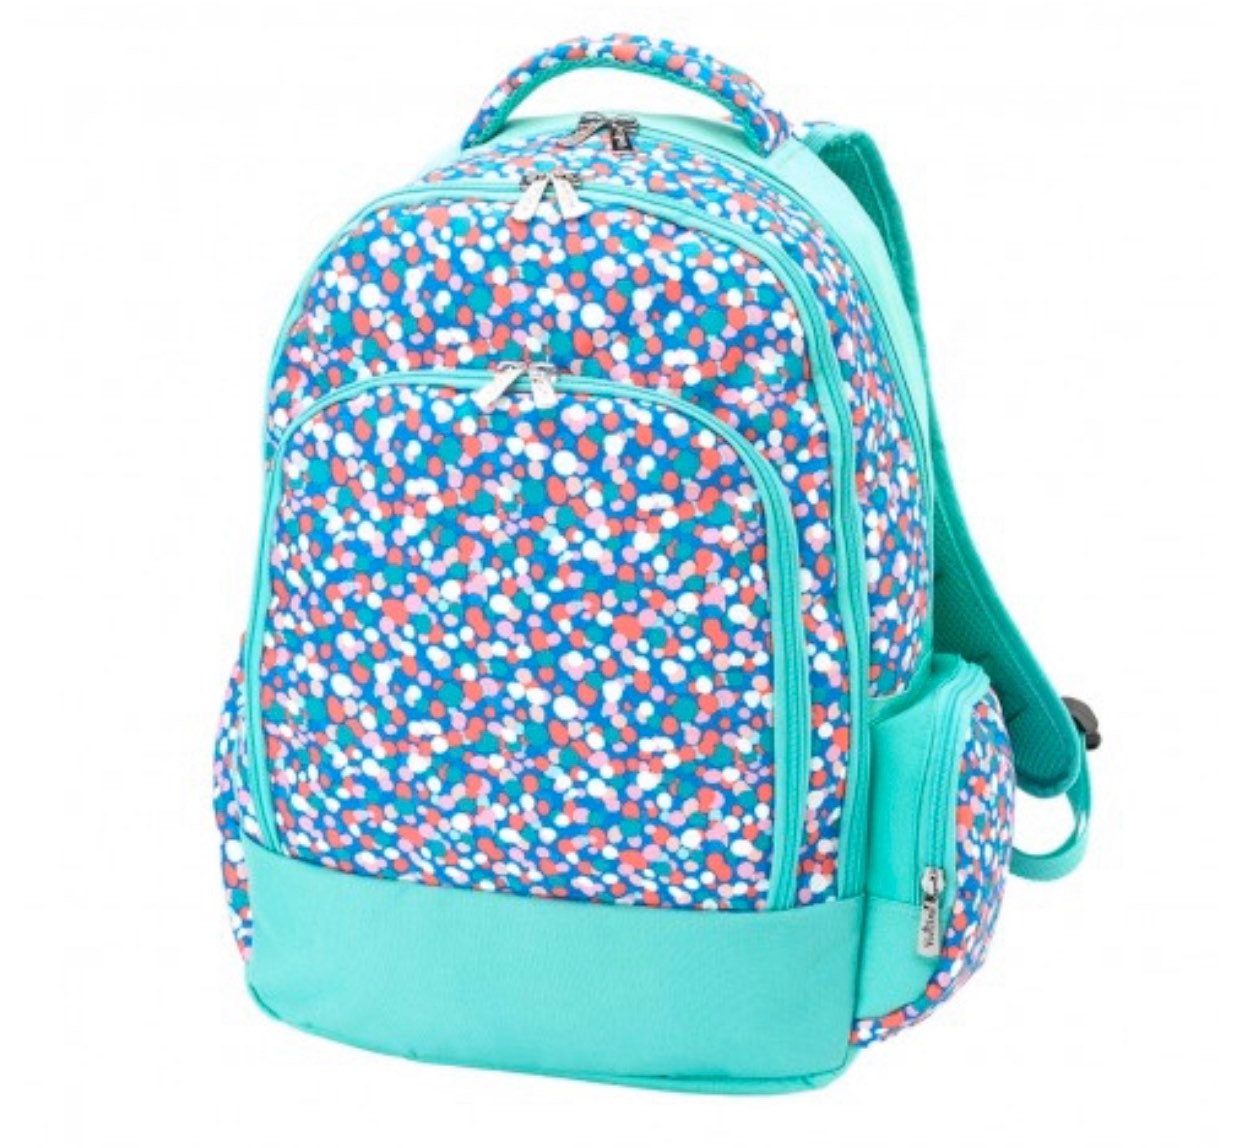 Monogrammed Confetti Pop Backpack Monogrammed Dot School Bag | Etsy